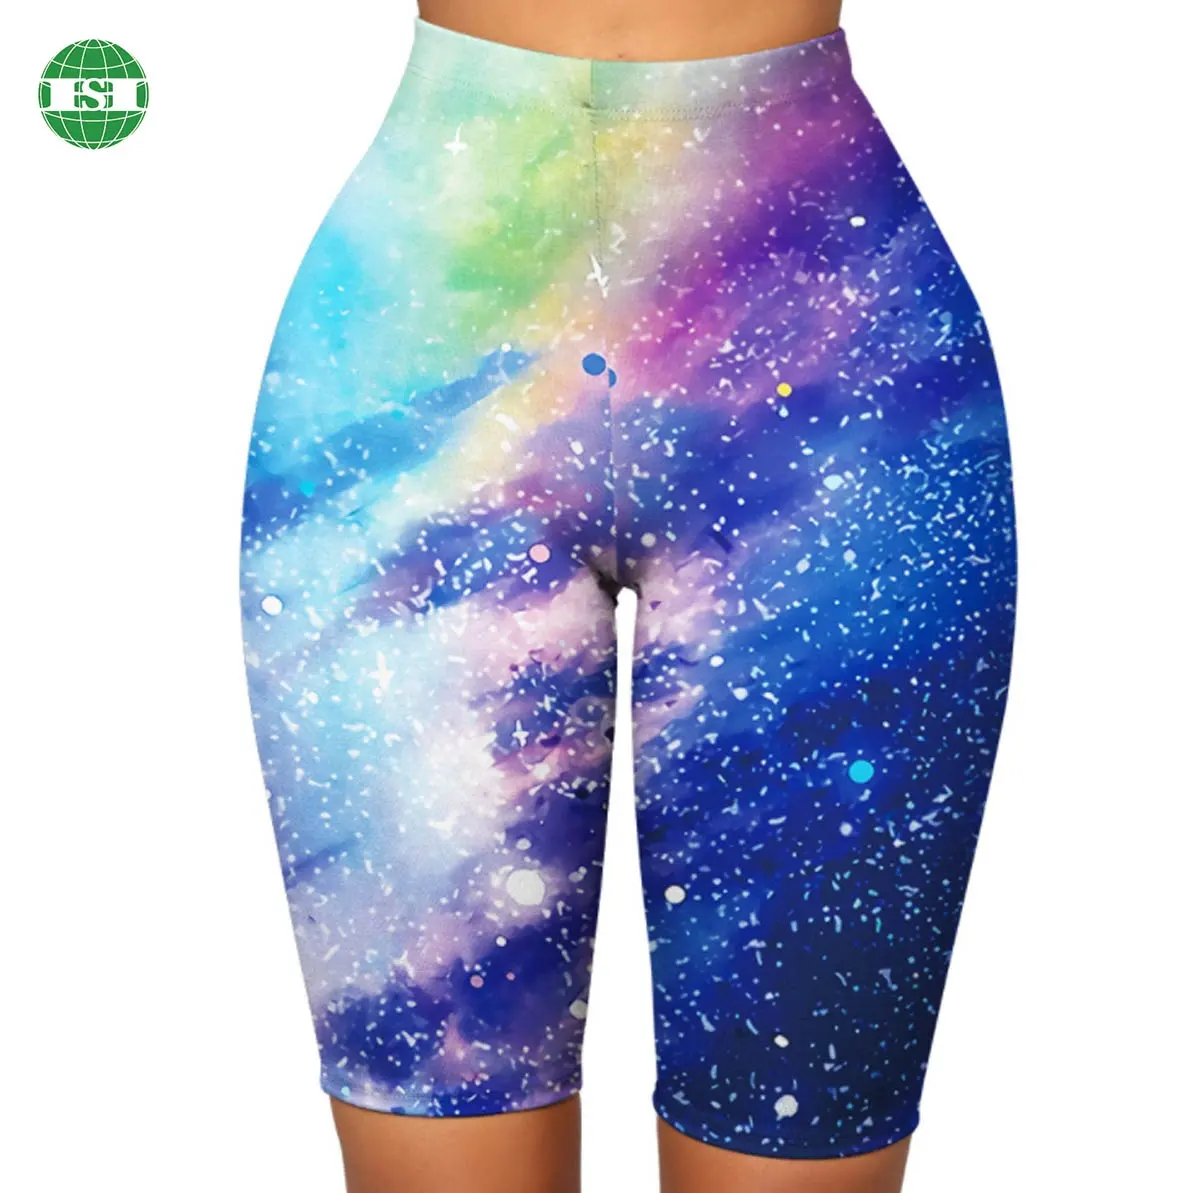 Custom galaxy shorts legging 4 way stretch space short tights sublimation